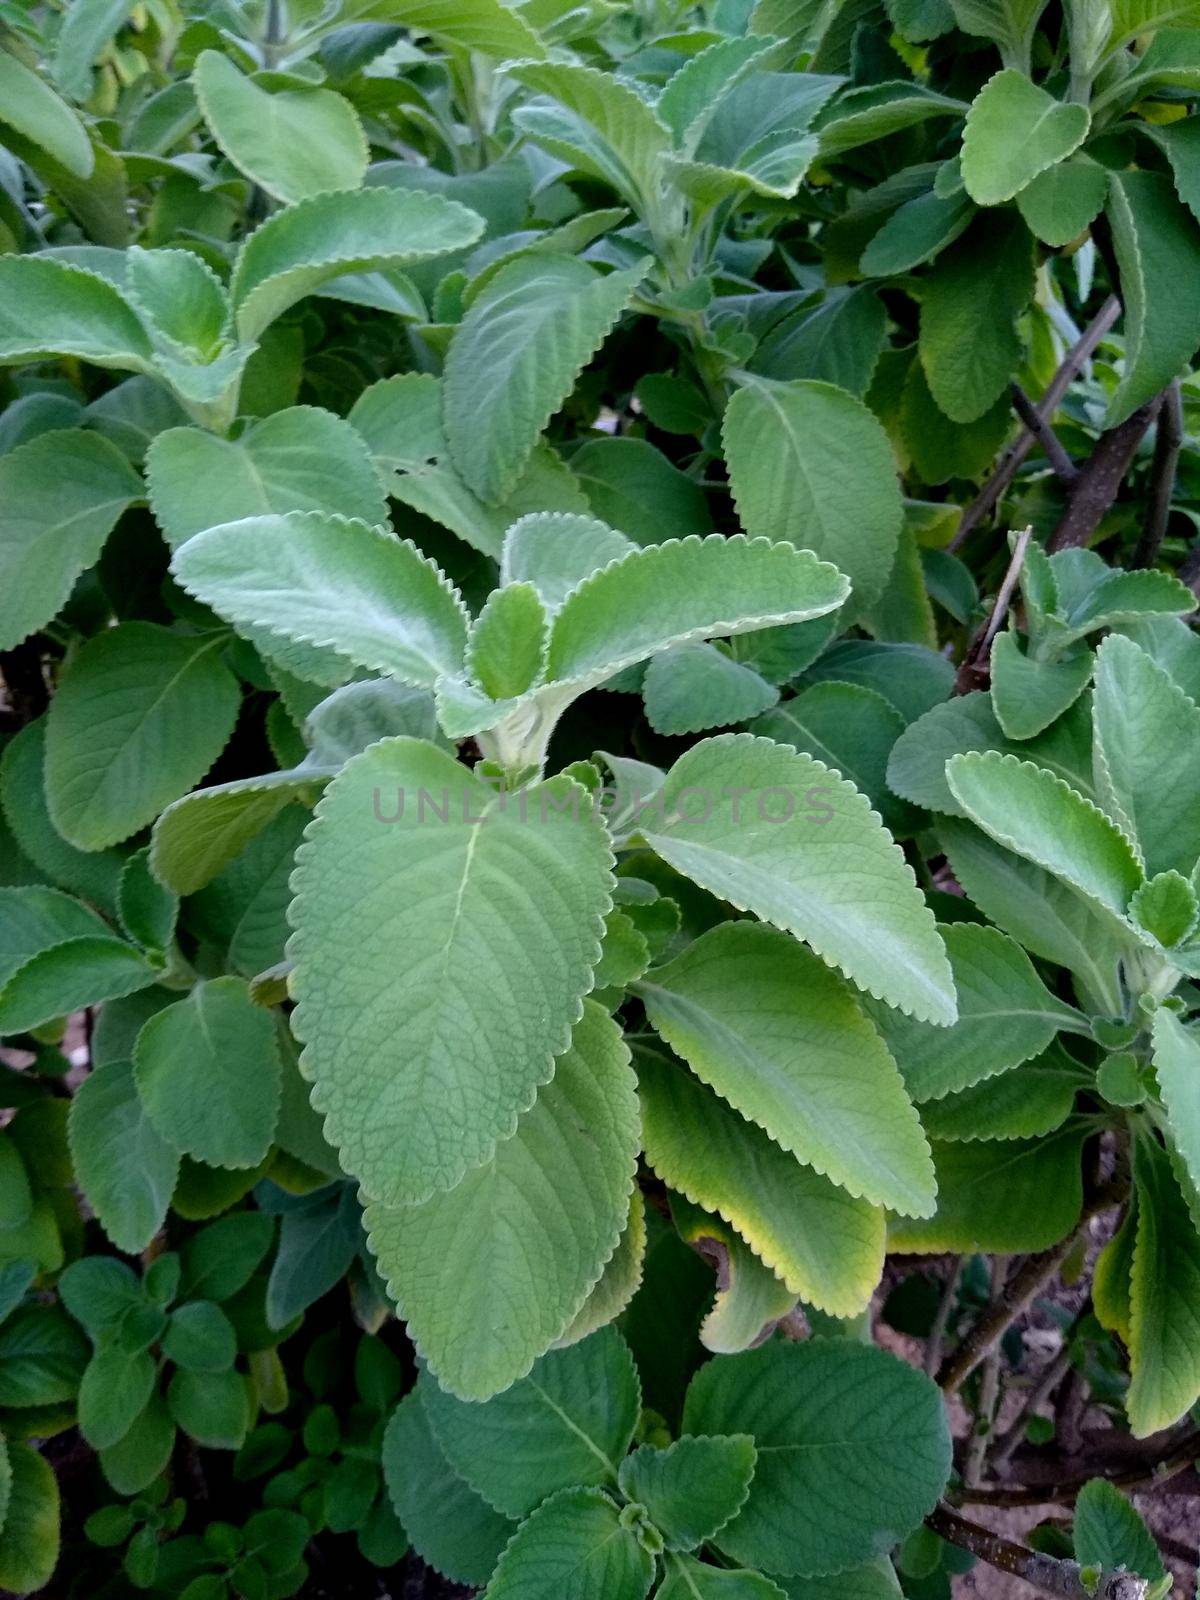  plectranthus barbatus plant by joasouza